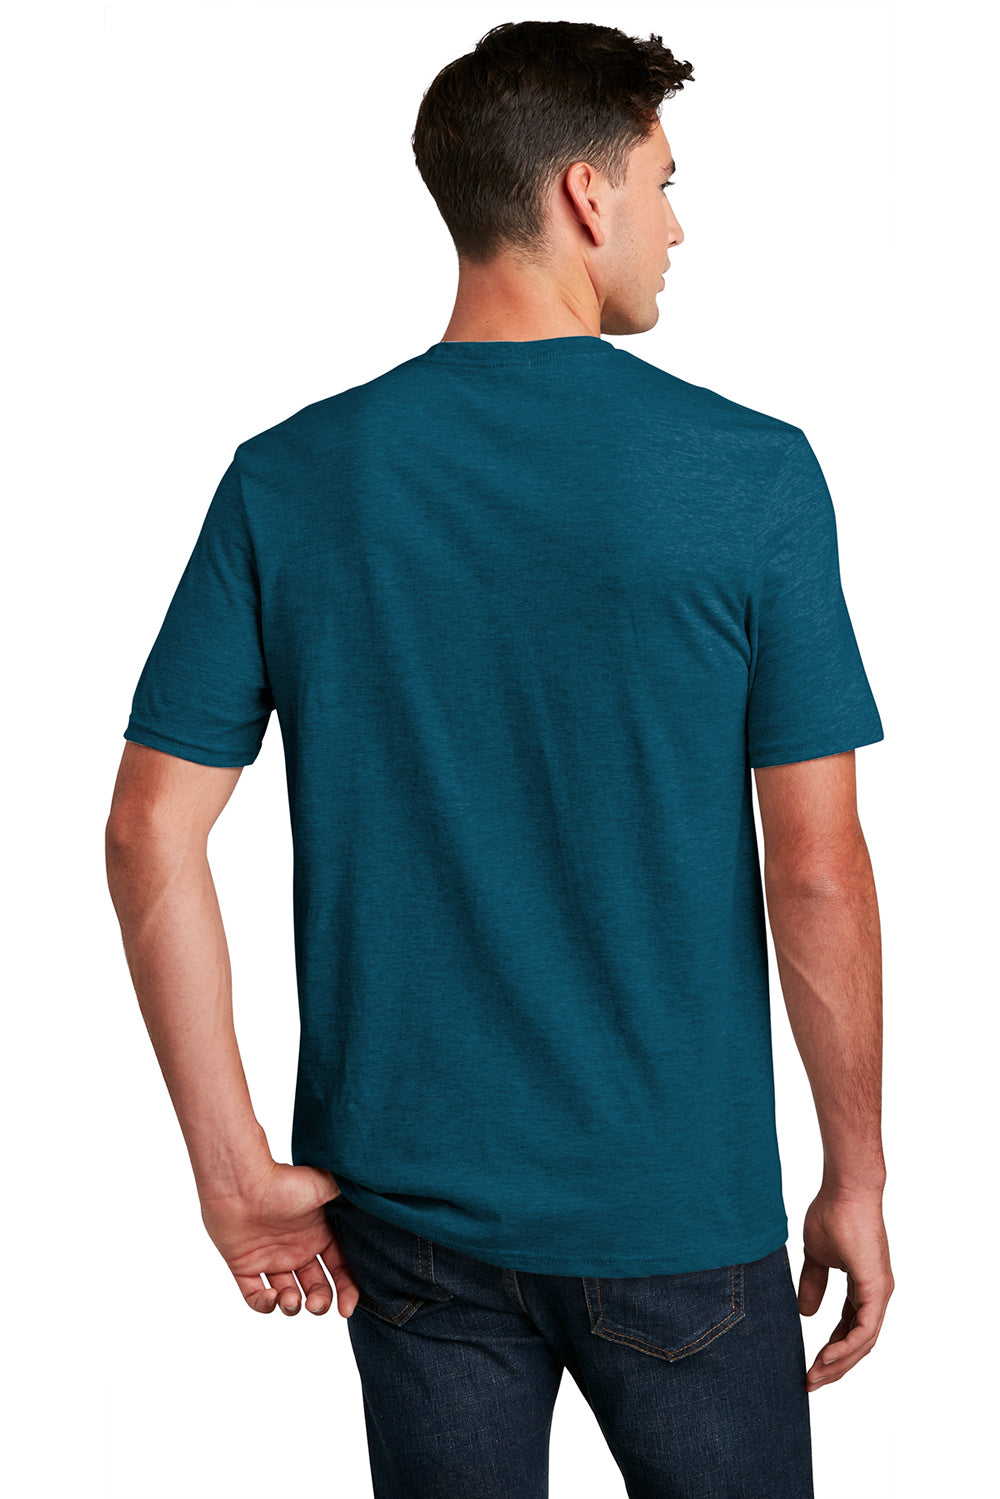 District DM108 Mens Perfect Blend Short Sleeve Crewneck T-Shirt Deep Turquoise Blue Fleck Back